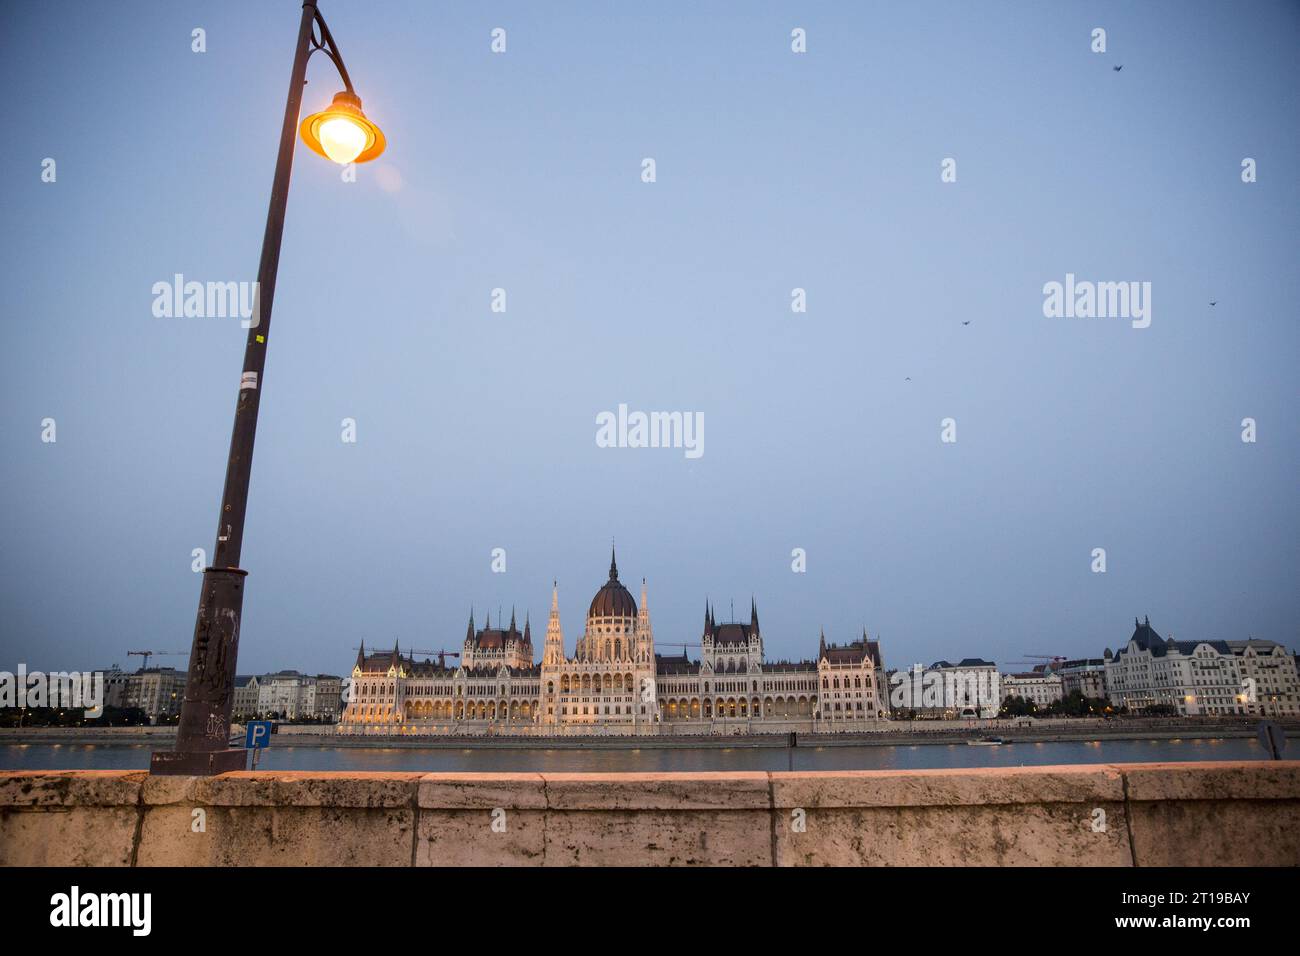 Vista nocturna del edificio del parlamento húngaro Foto de stock